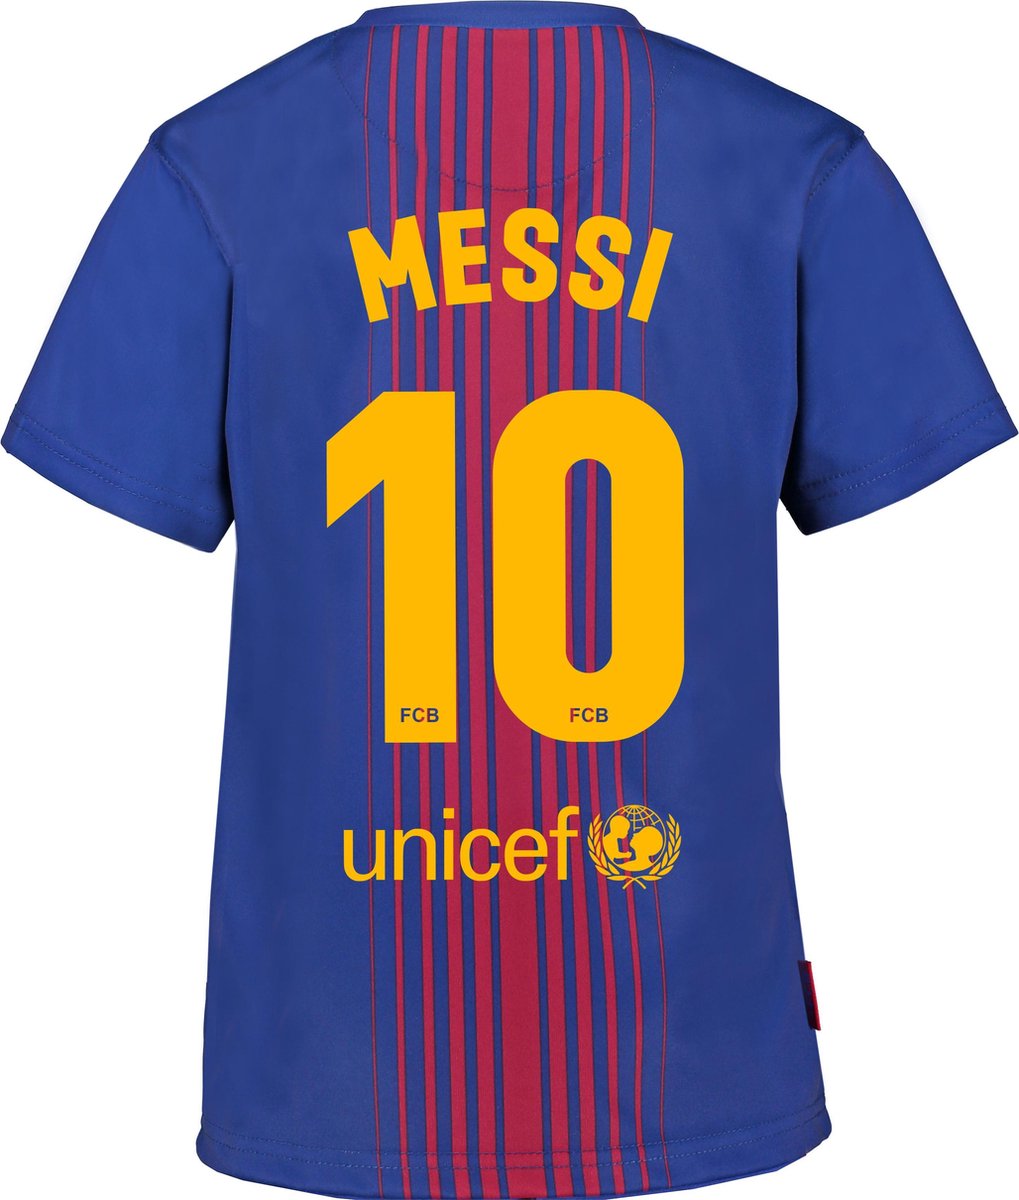 FC Barcelona Messi shirt